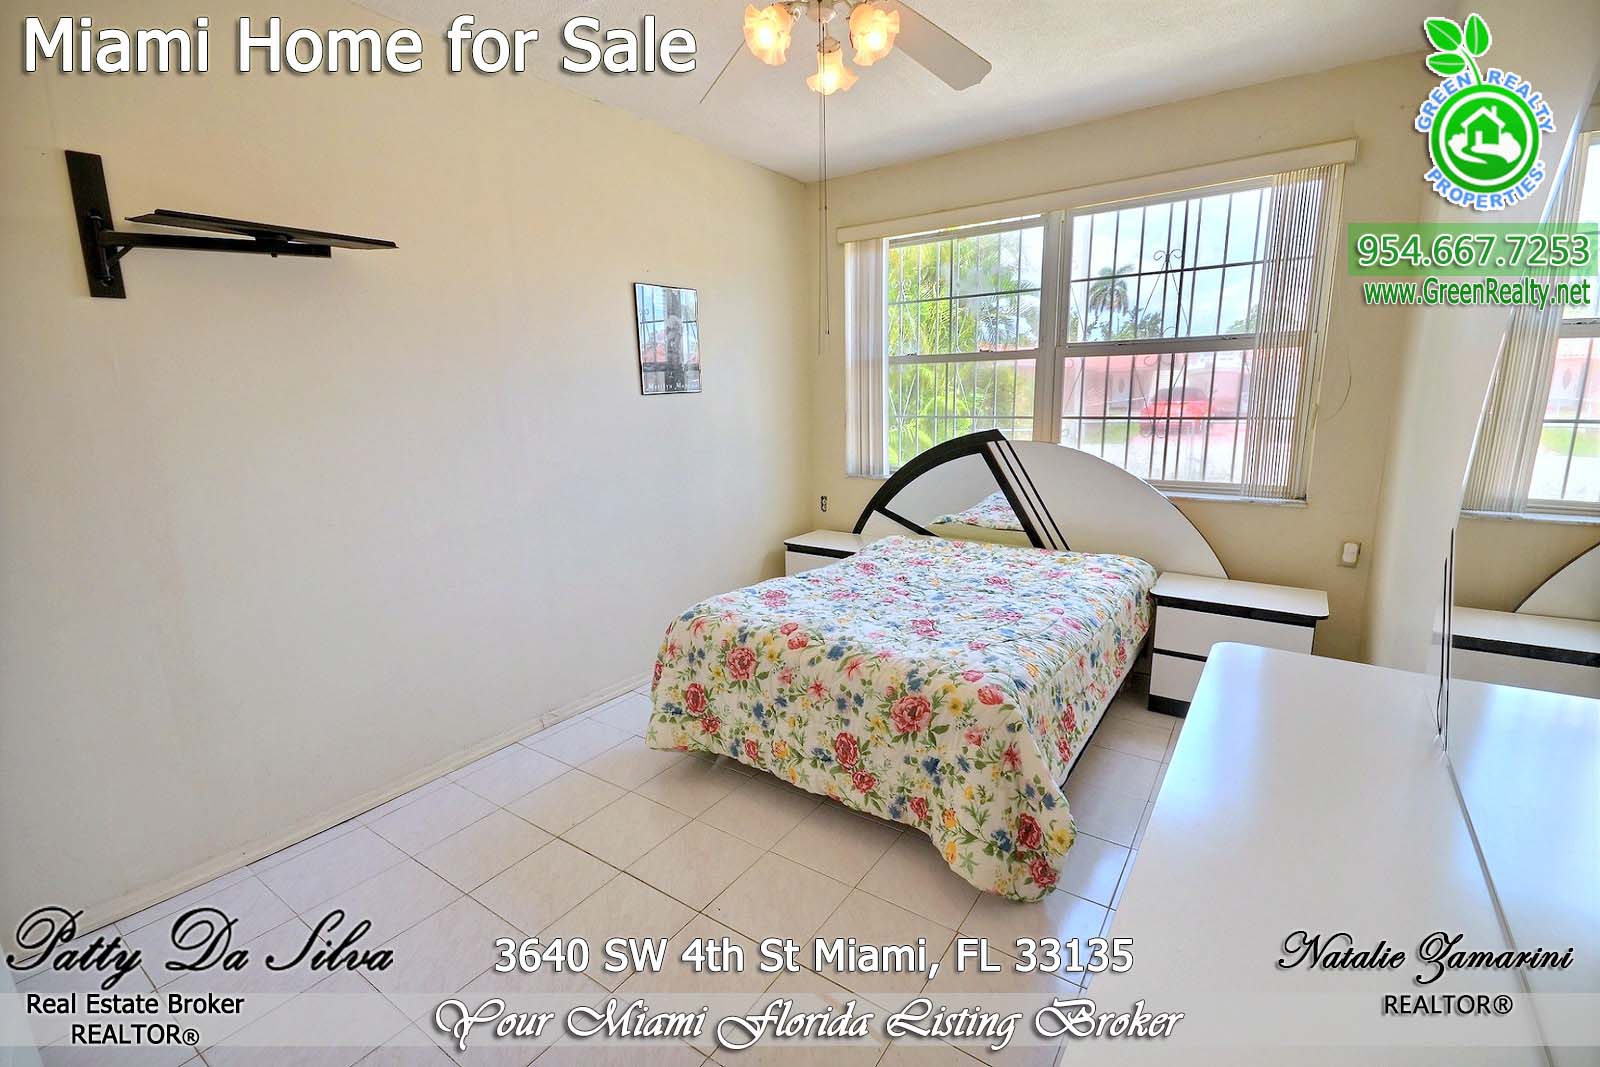 Miami Florida Homes For Sale